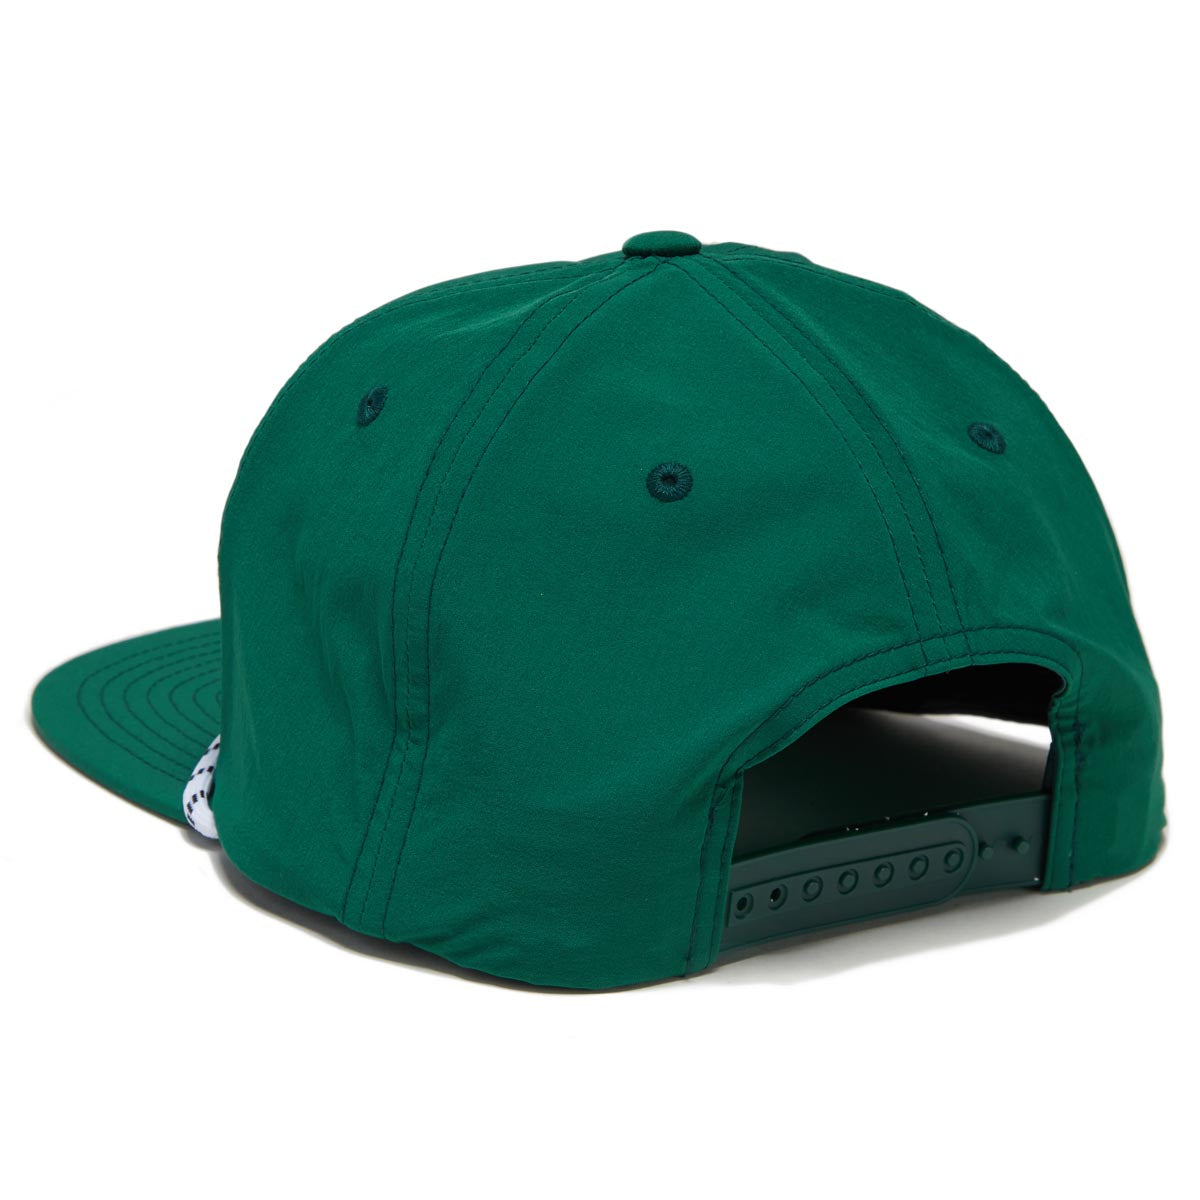 Brixton Persist Mp Snapback Hat - Trekking Green image 2